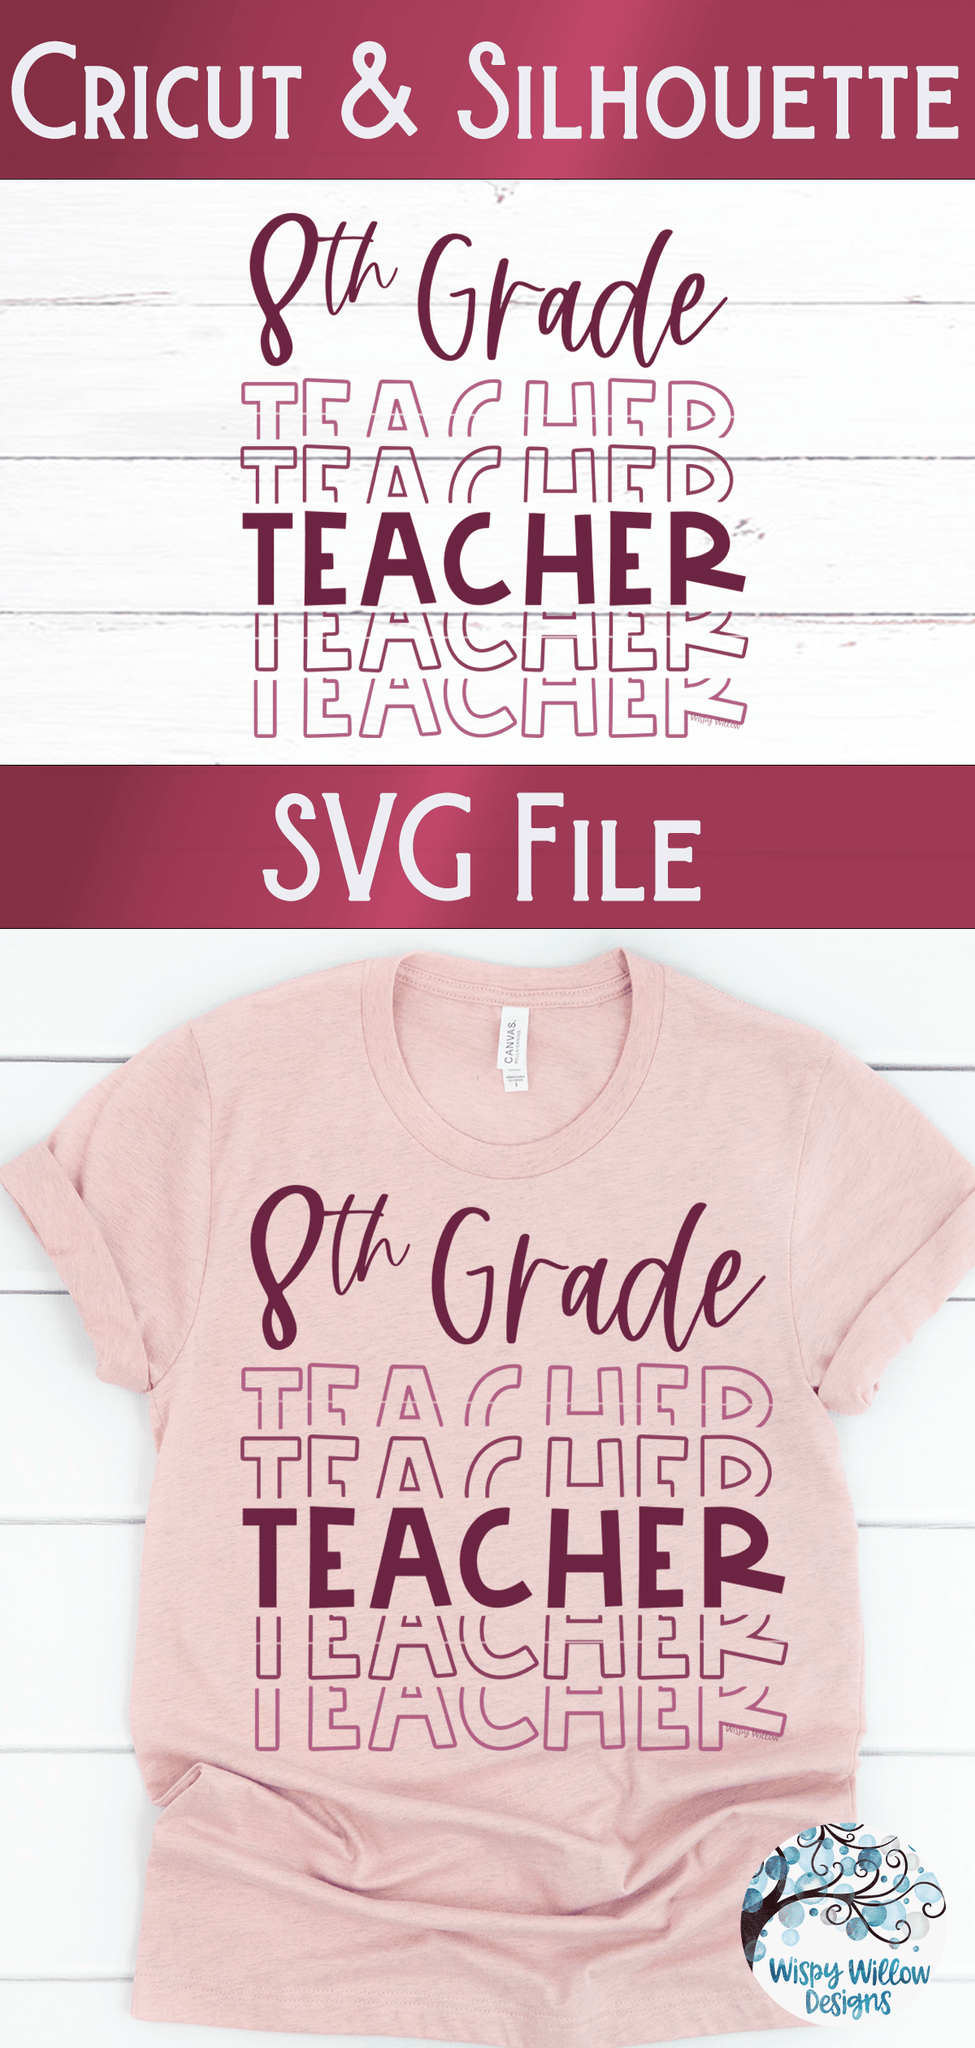 Eighth Grade Teacher SVG | Teacher Shirt SVG Wispy Willow Designs Company